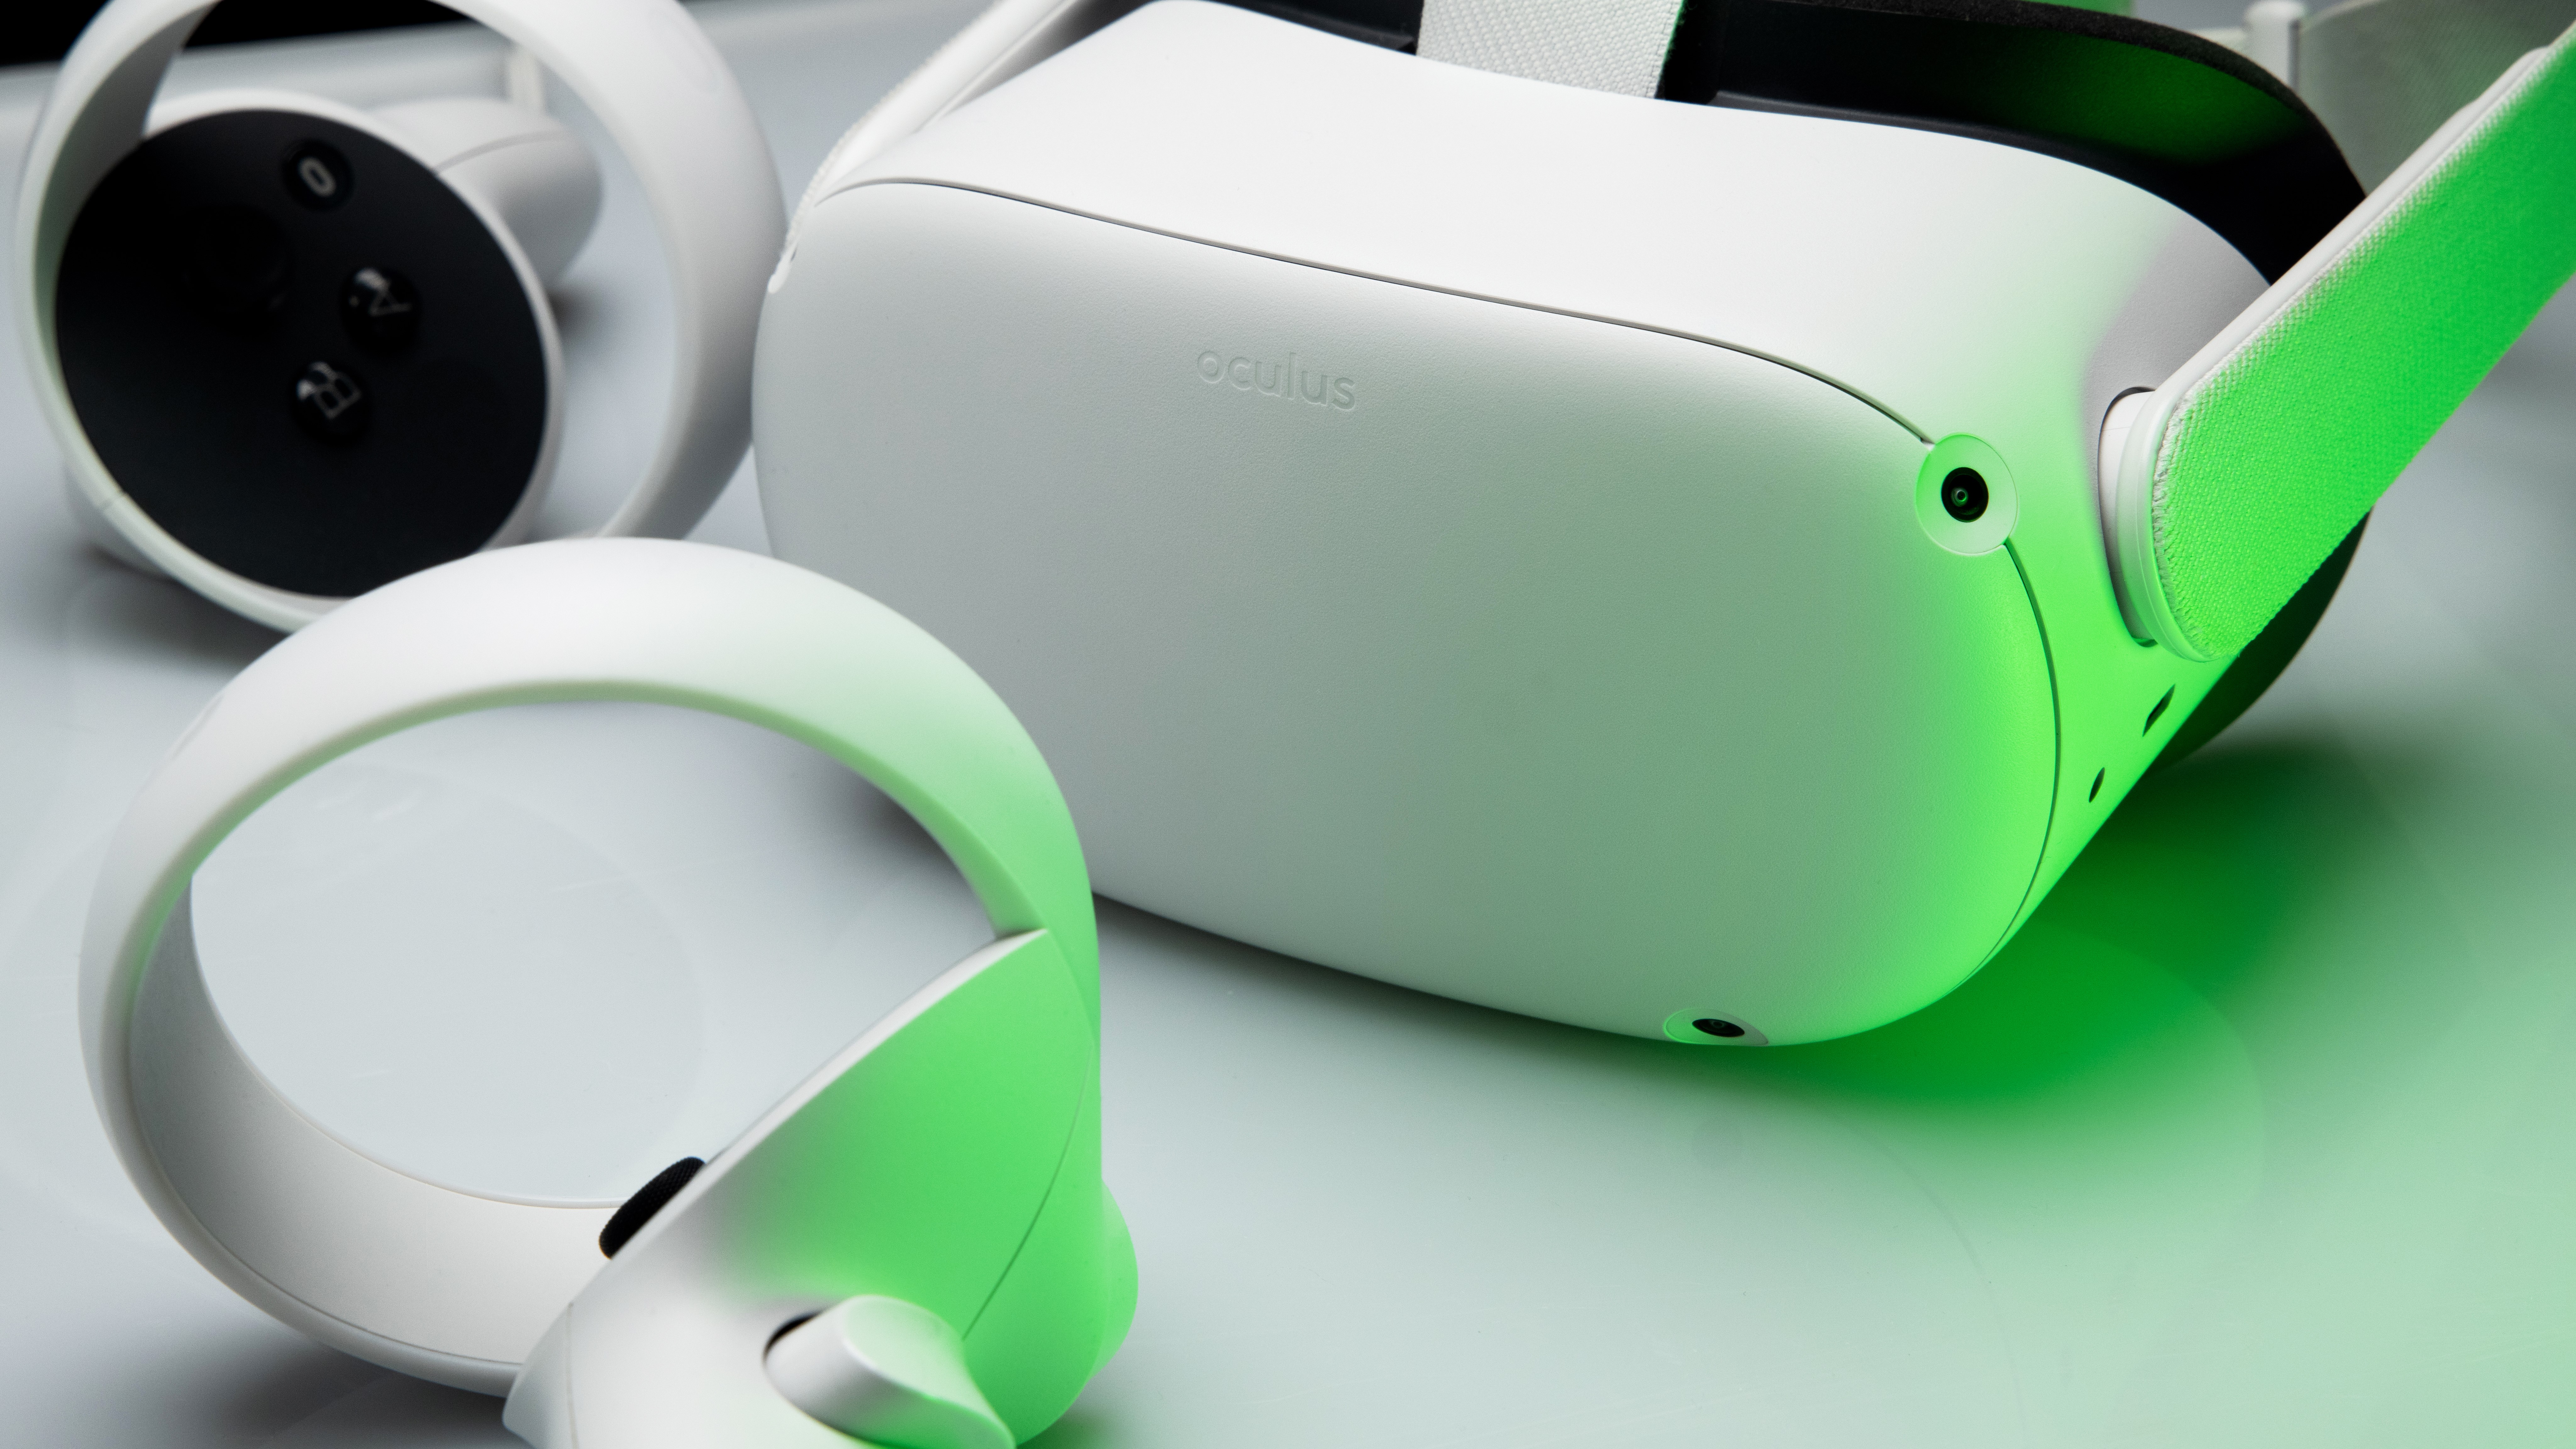 Oculus Quest 2 virtual reality headset under green light